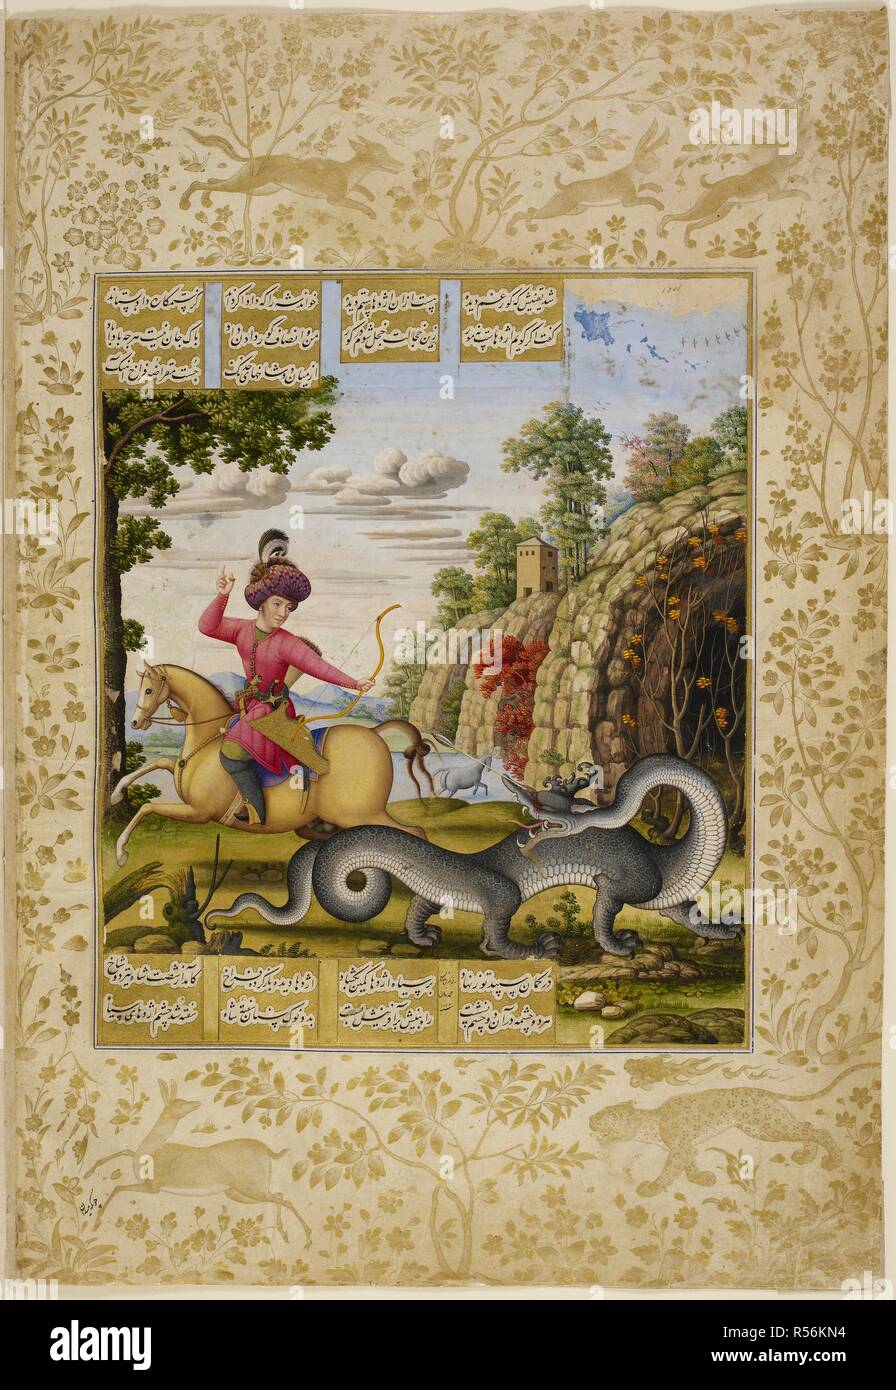 Bahram Gur slays a dragon. Khamsa. Mazamdaran, Northern Iran, 1675. Bahram Gur killing a dragon. A miniature painting from a seventeenth century additon to a sixteenth century manuscript.  Image taken from Khamsa.  Originally published/produced in Mazamdaran, Northern Iran, 1675. . Source: Or. 2265, f.203v. Language: Persian. Author: NIZAMI. MUHAMMAD ZAMAN. Stock Photo